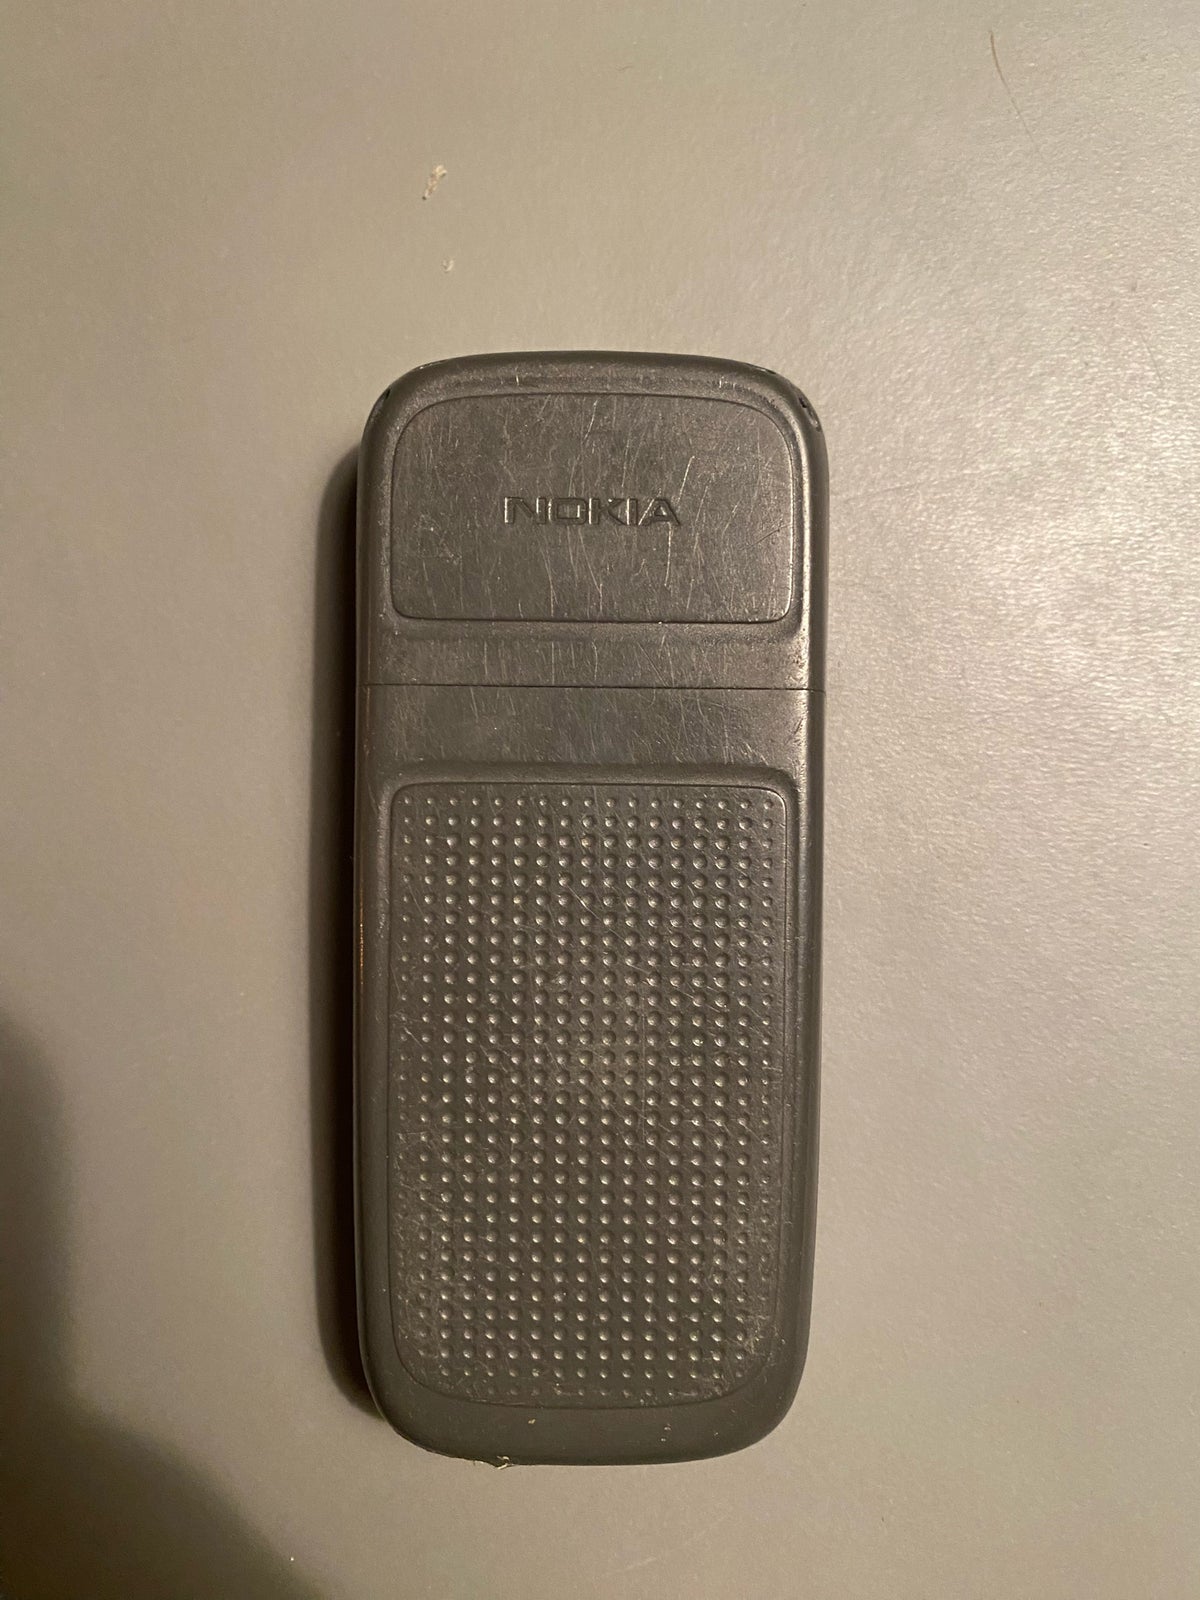 Nokia ?, God